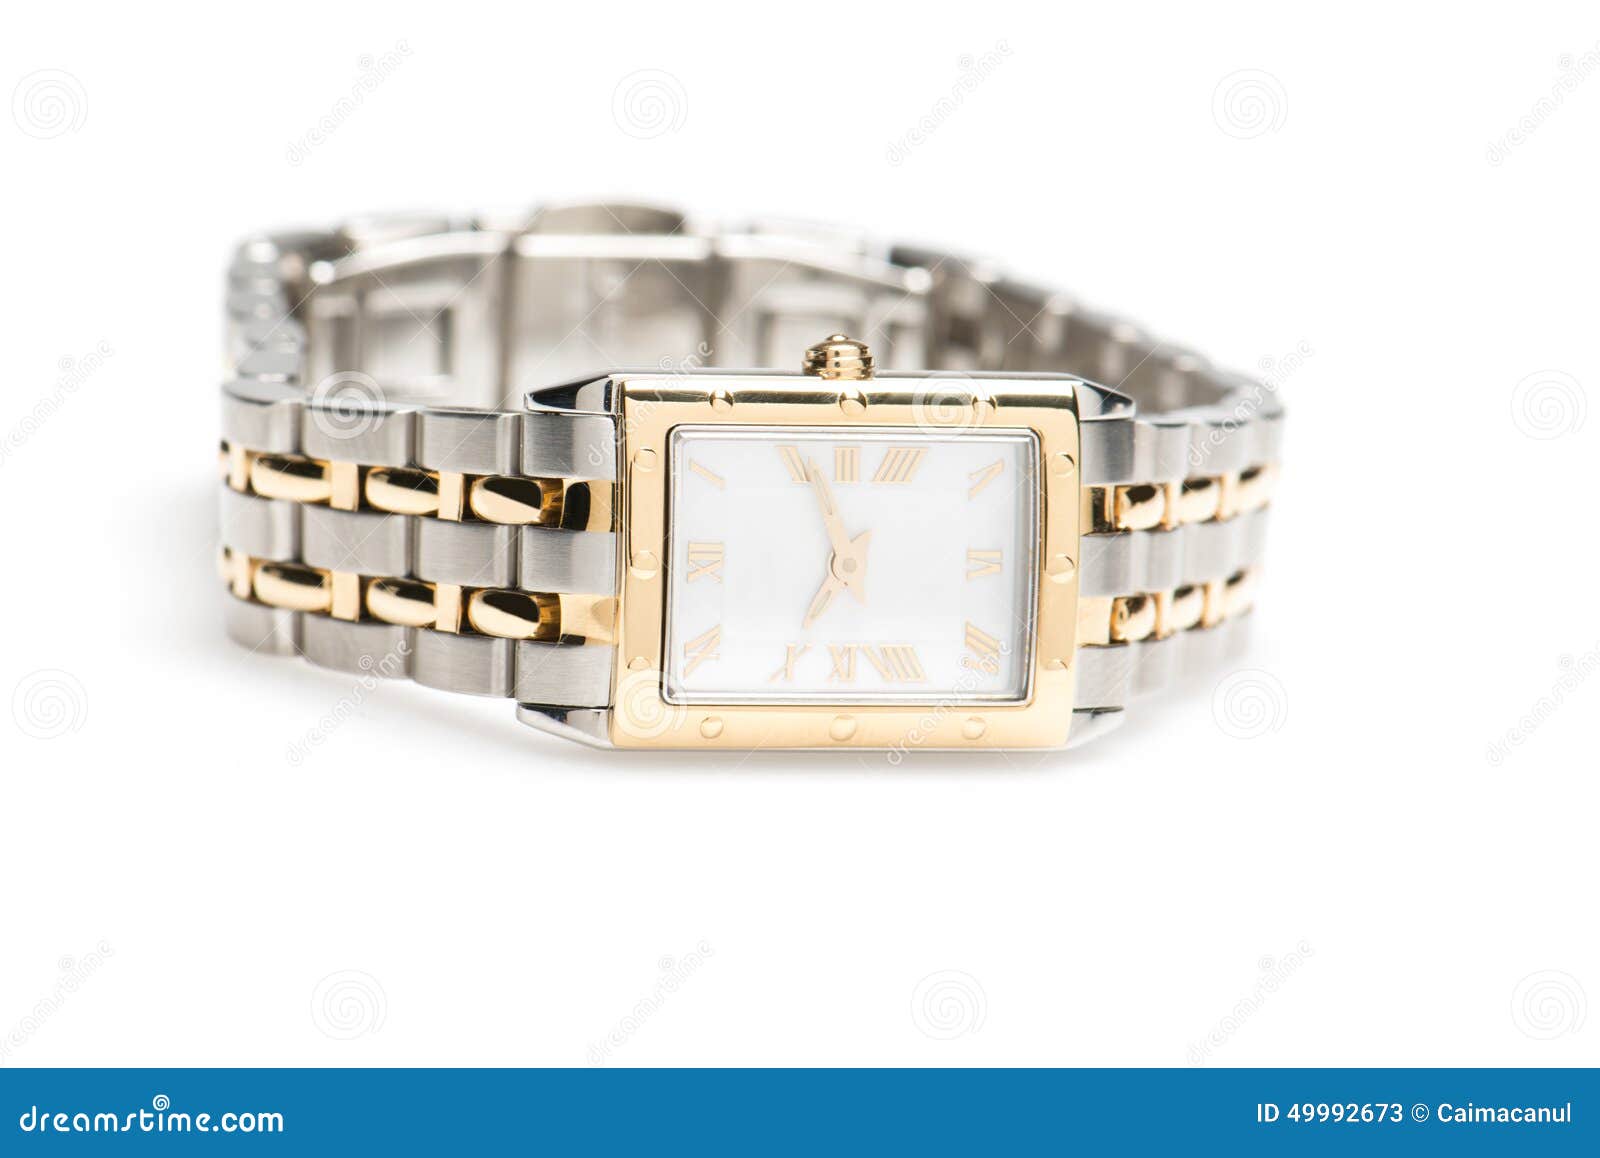 Female wrist watch stock image. Image of shape, jewelry - 49992673